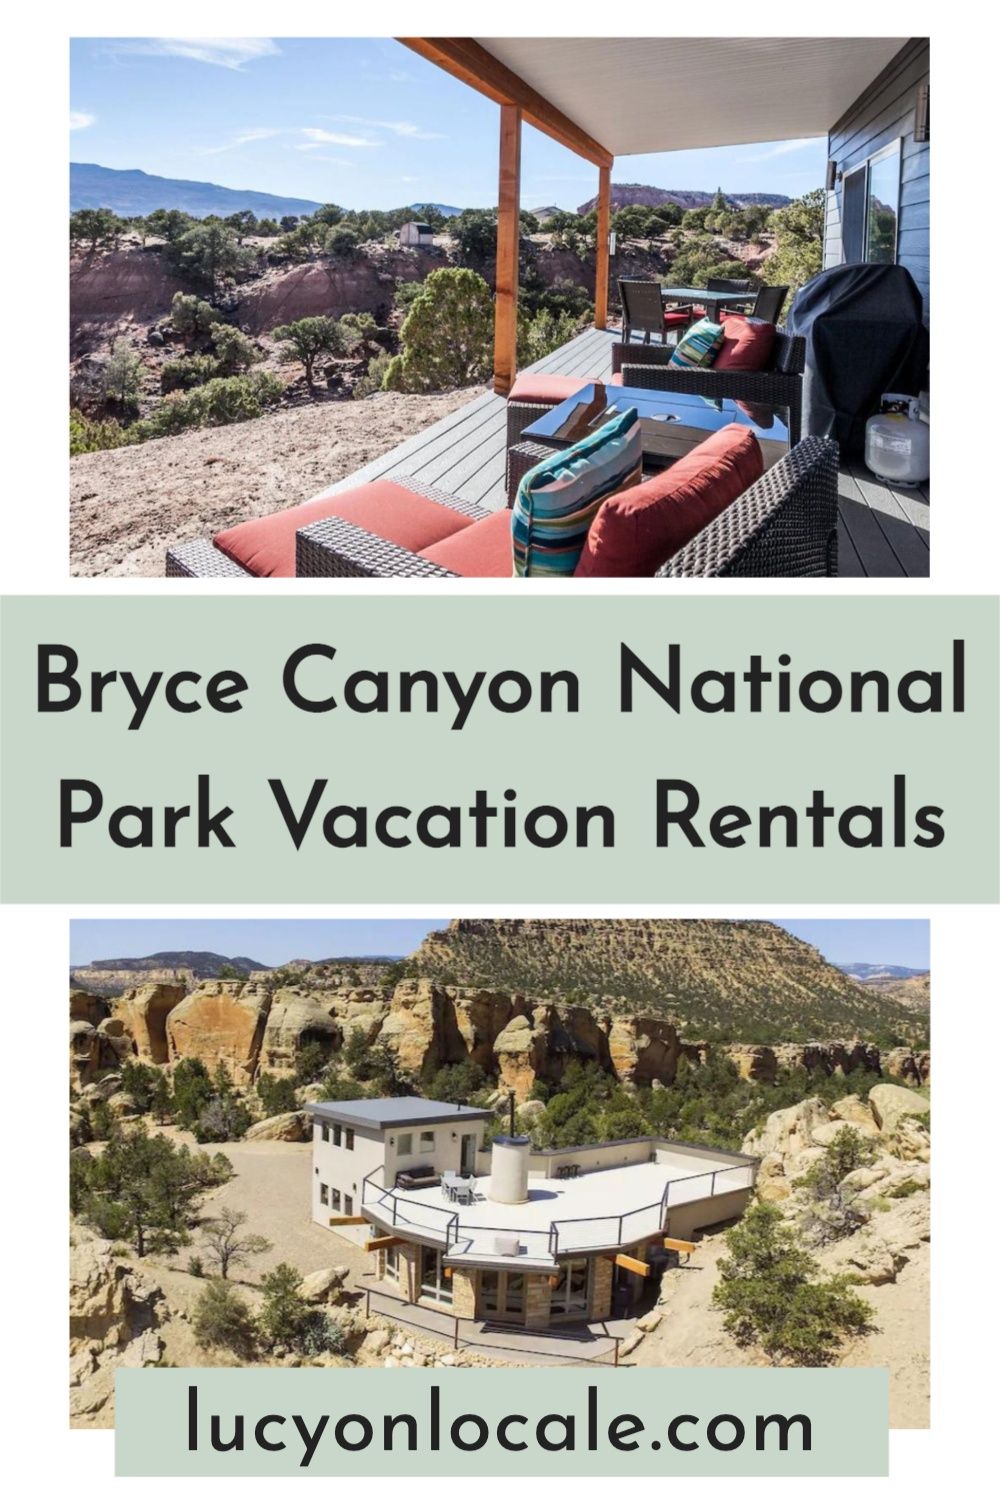 Bryce Canyon National Park vacation rentals